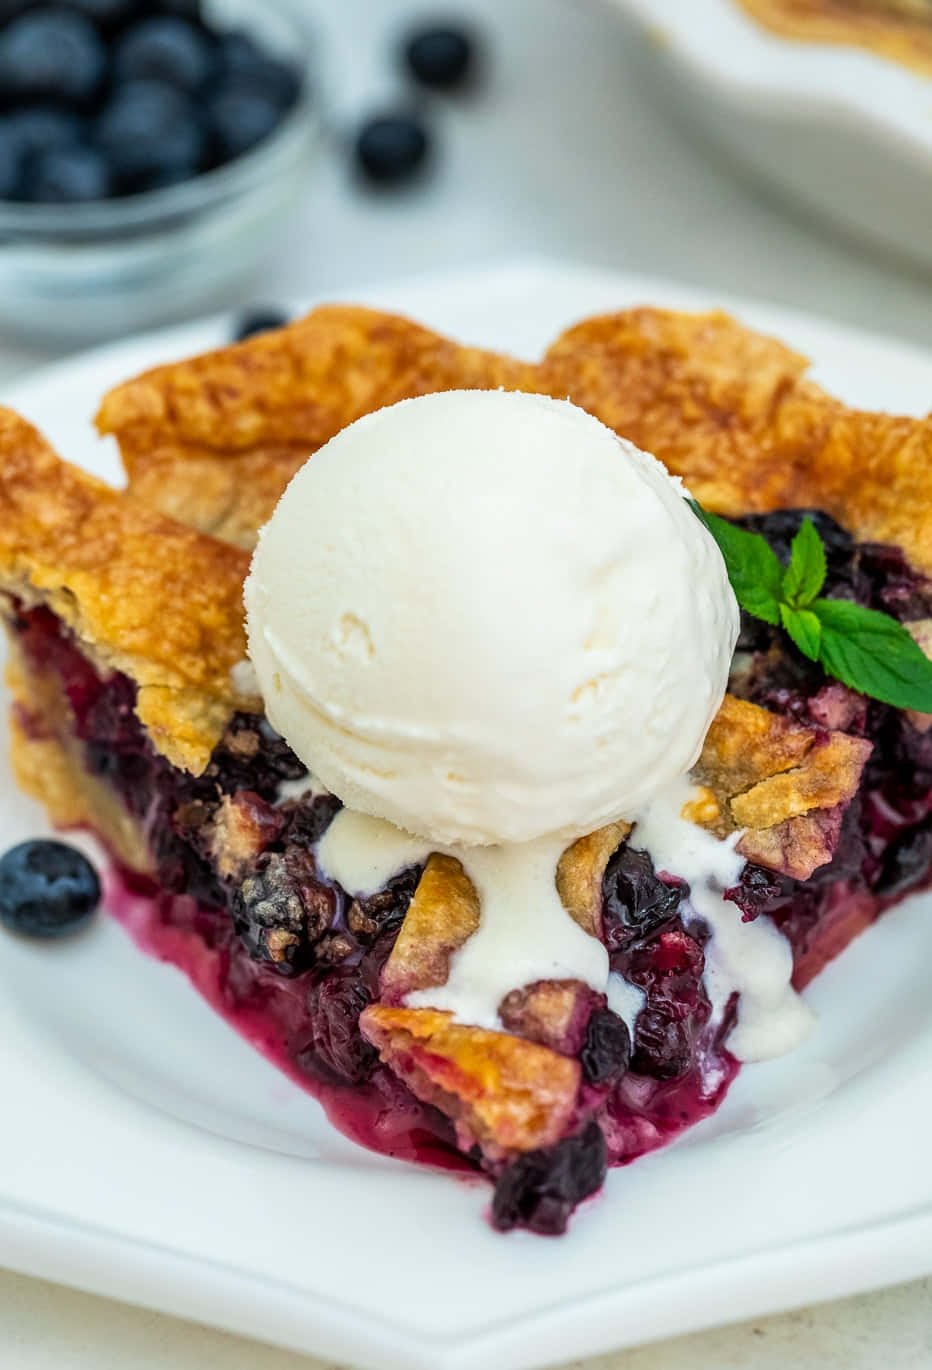 Enjoy a slice of delicious homemade blueberry pie! Wallpaper